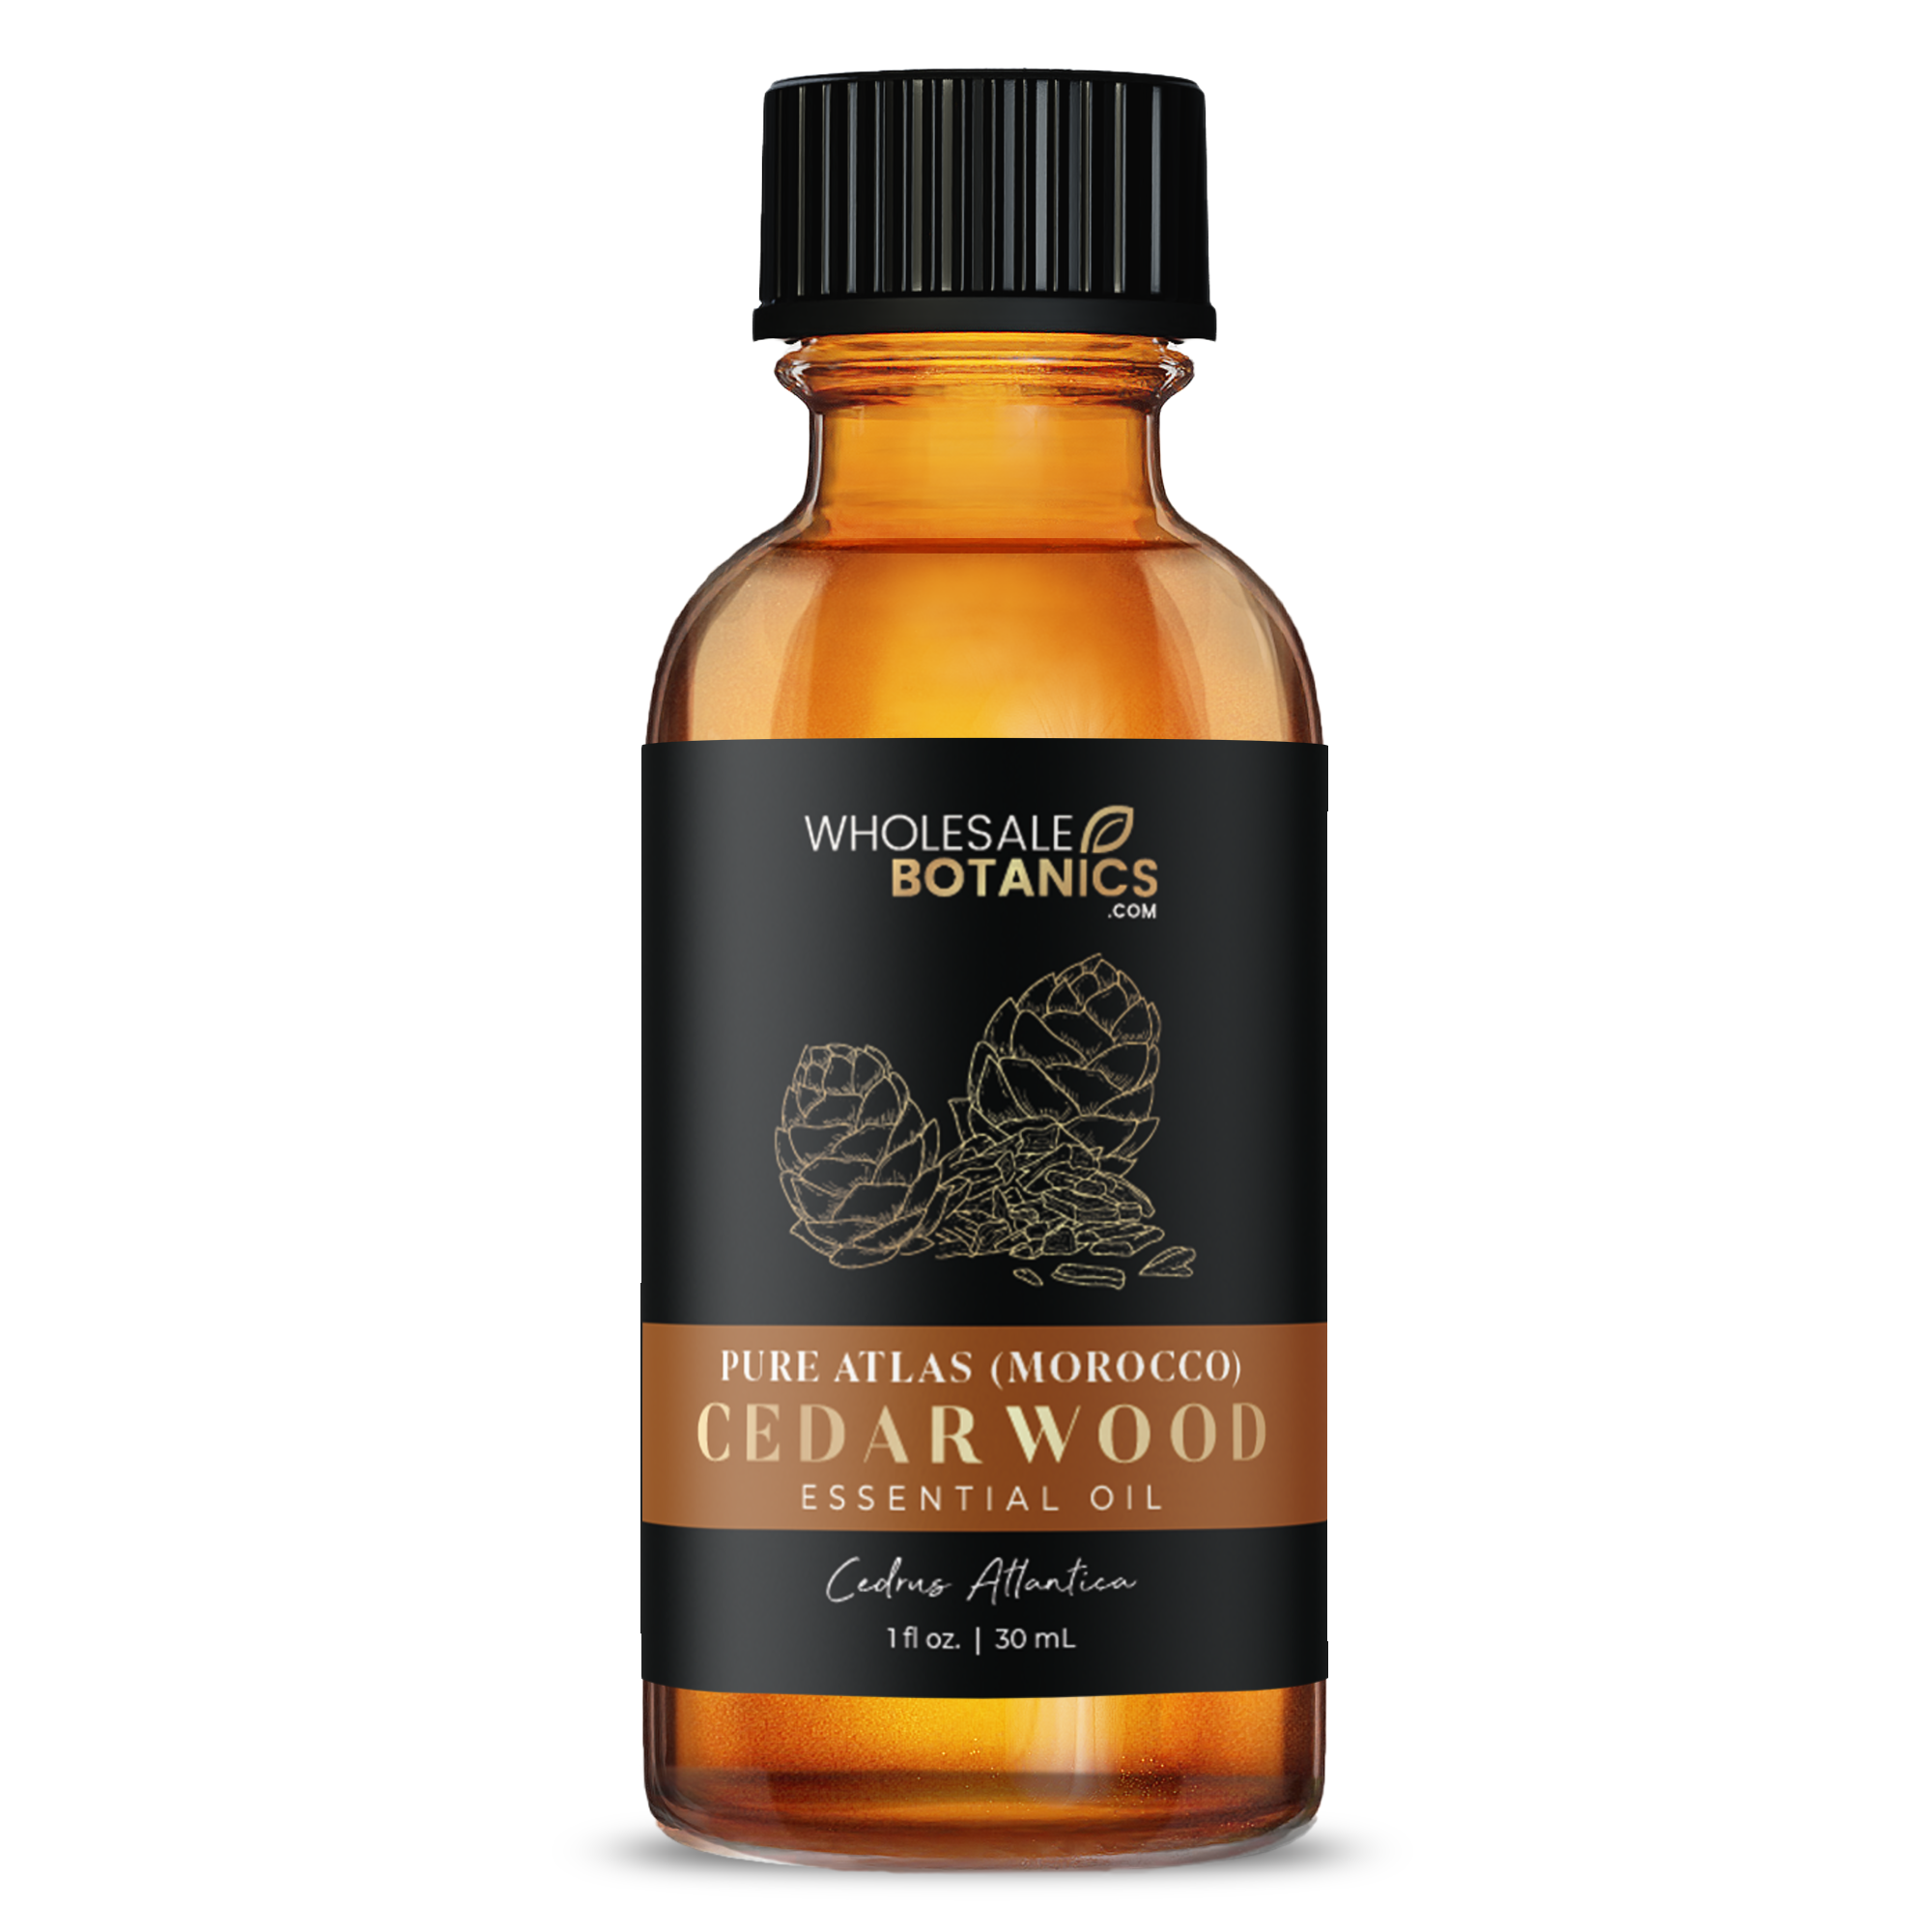 Cedarwood Essential Oil - Purity Atlas Cedarwood (Morocco) - 1 oz